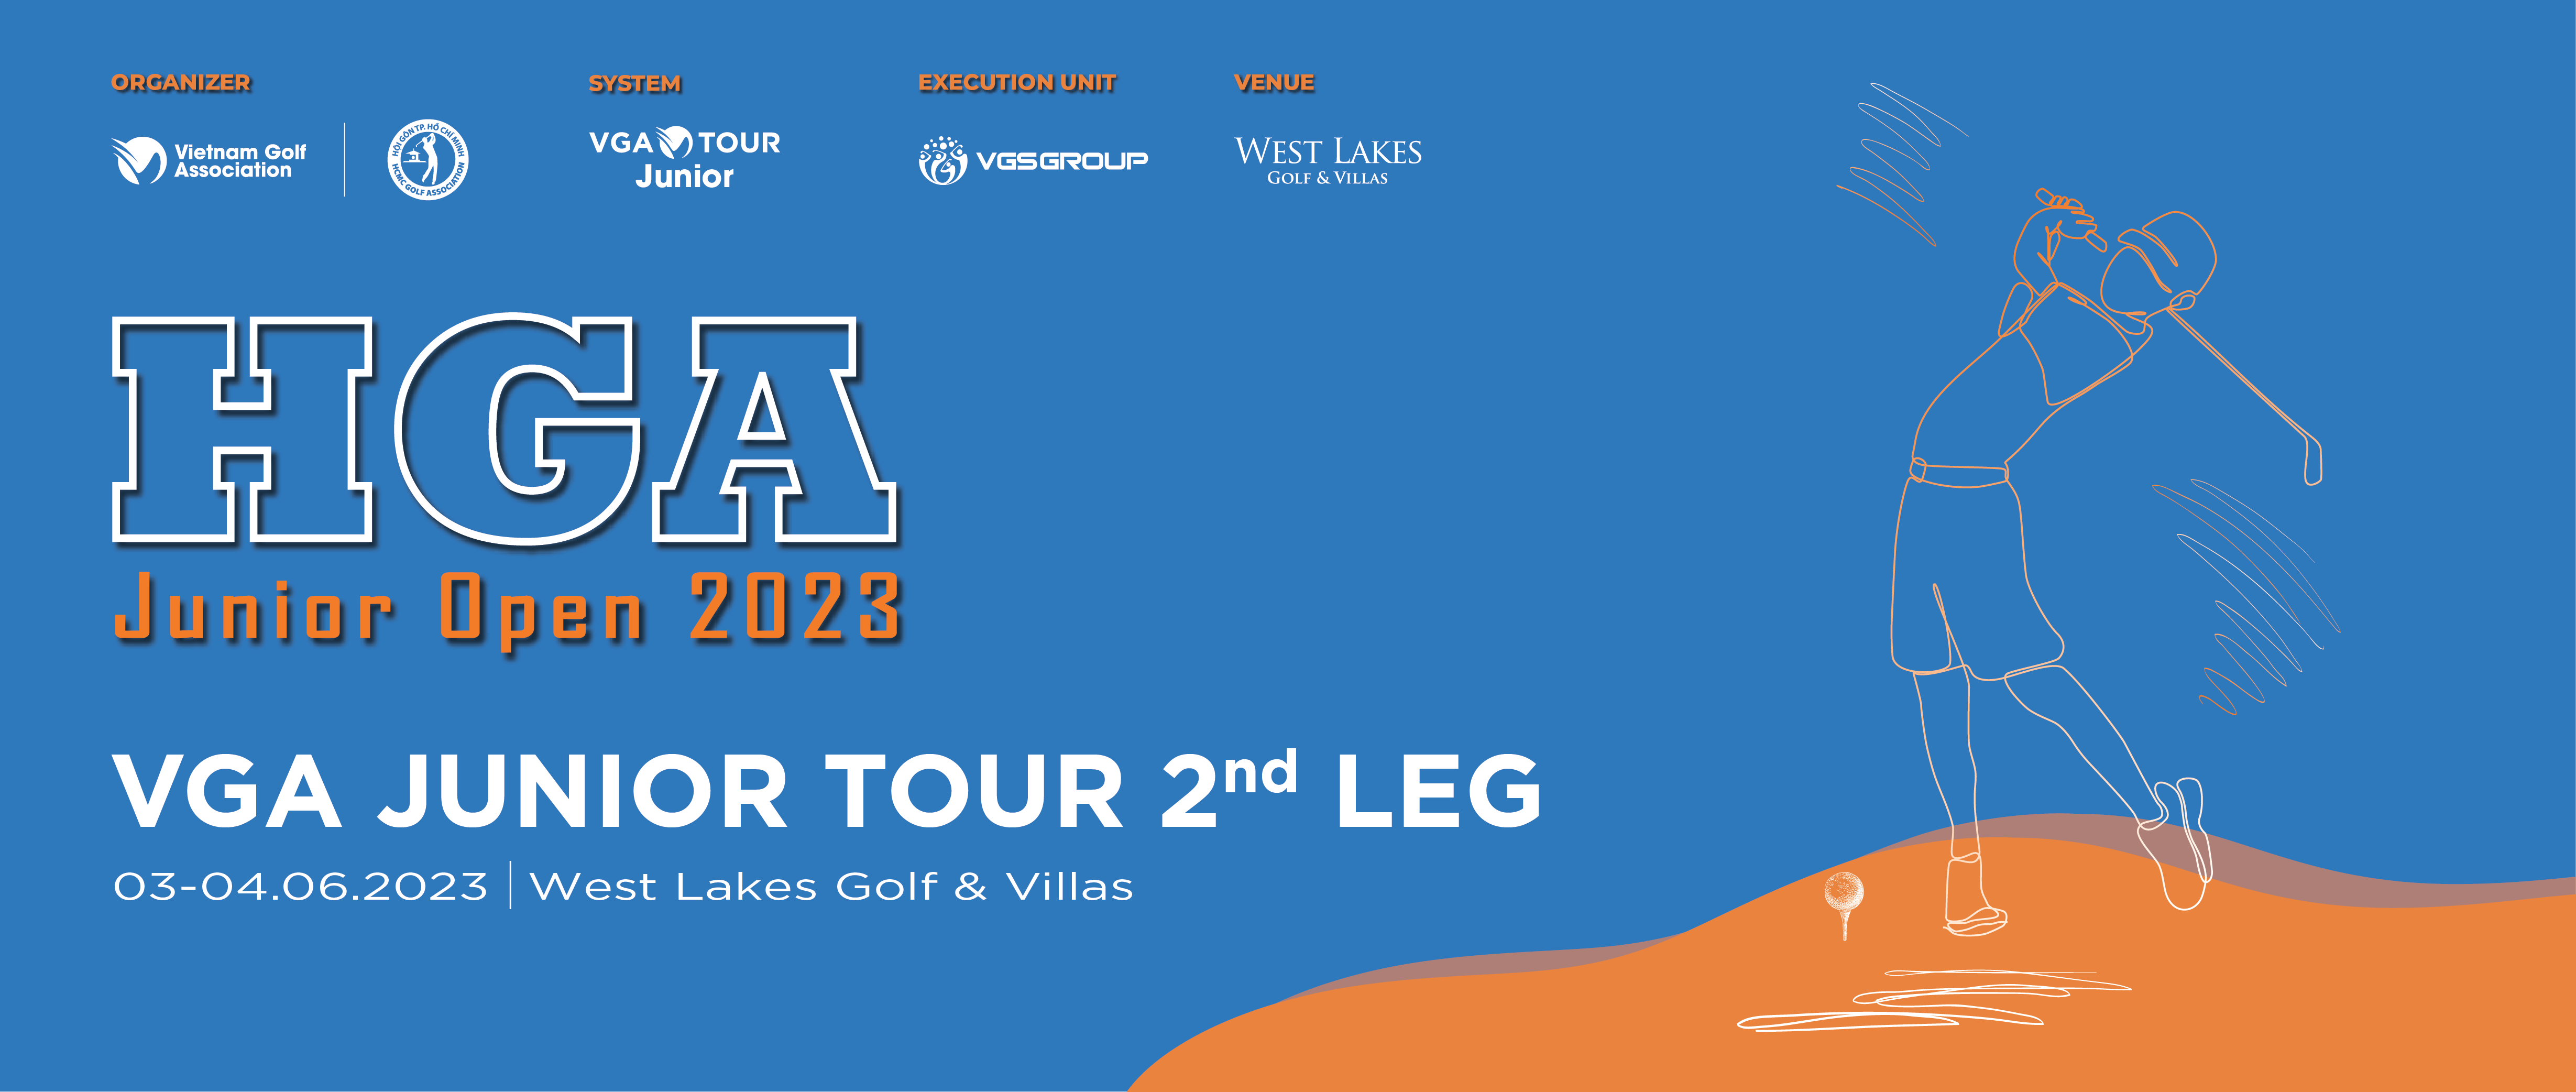 Giải VGA Junior Tour 2nd Leg